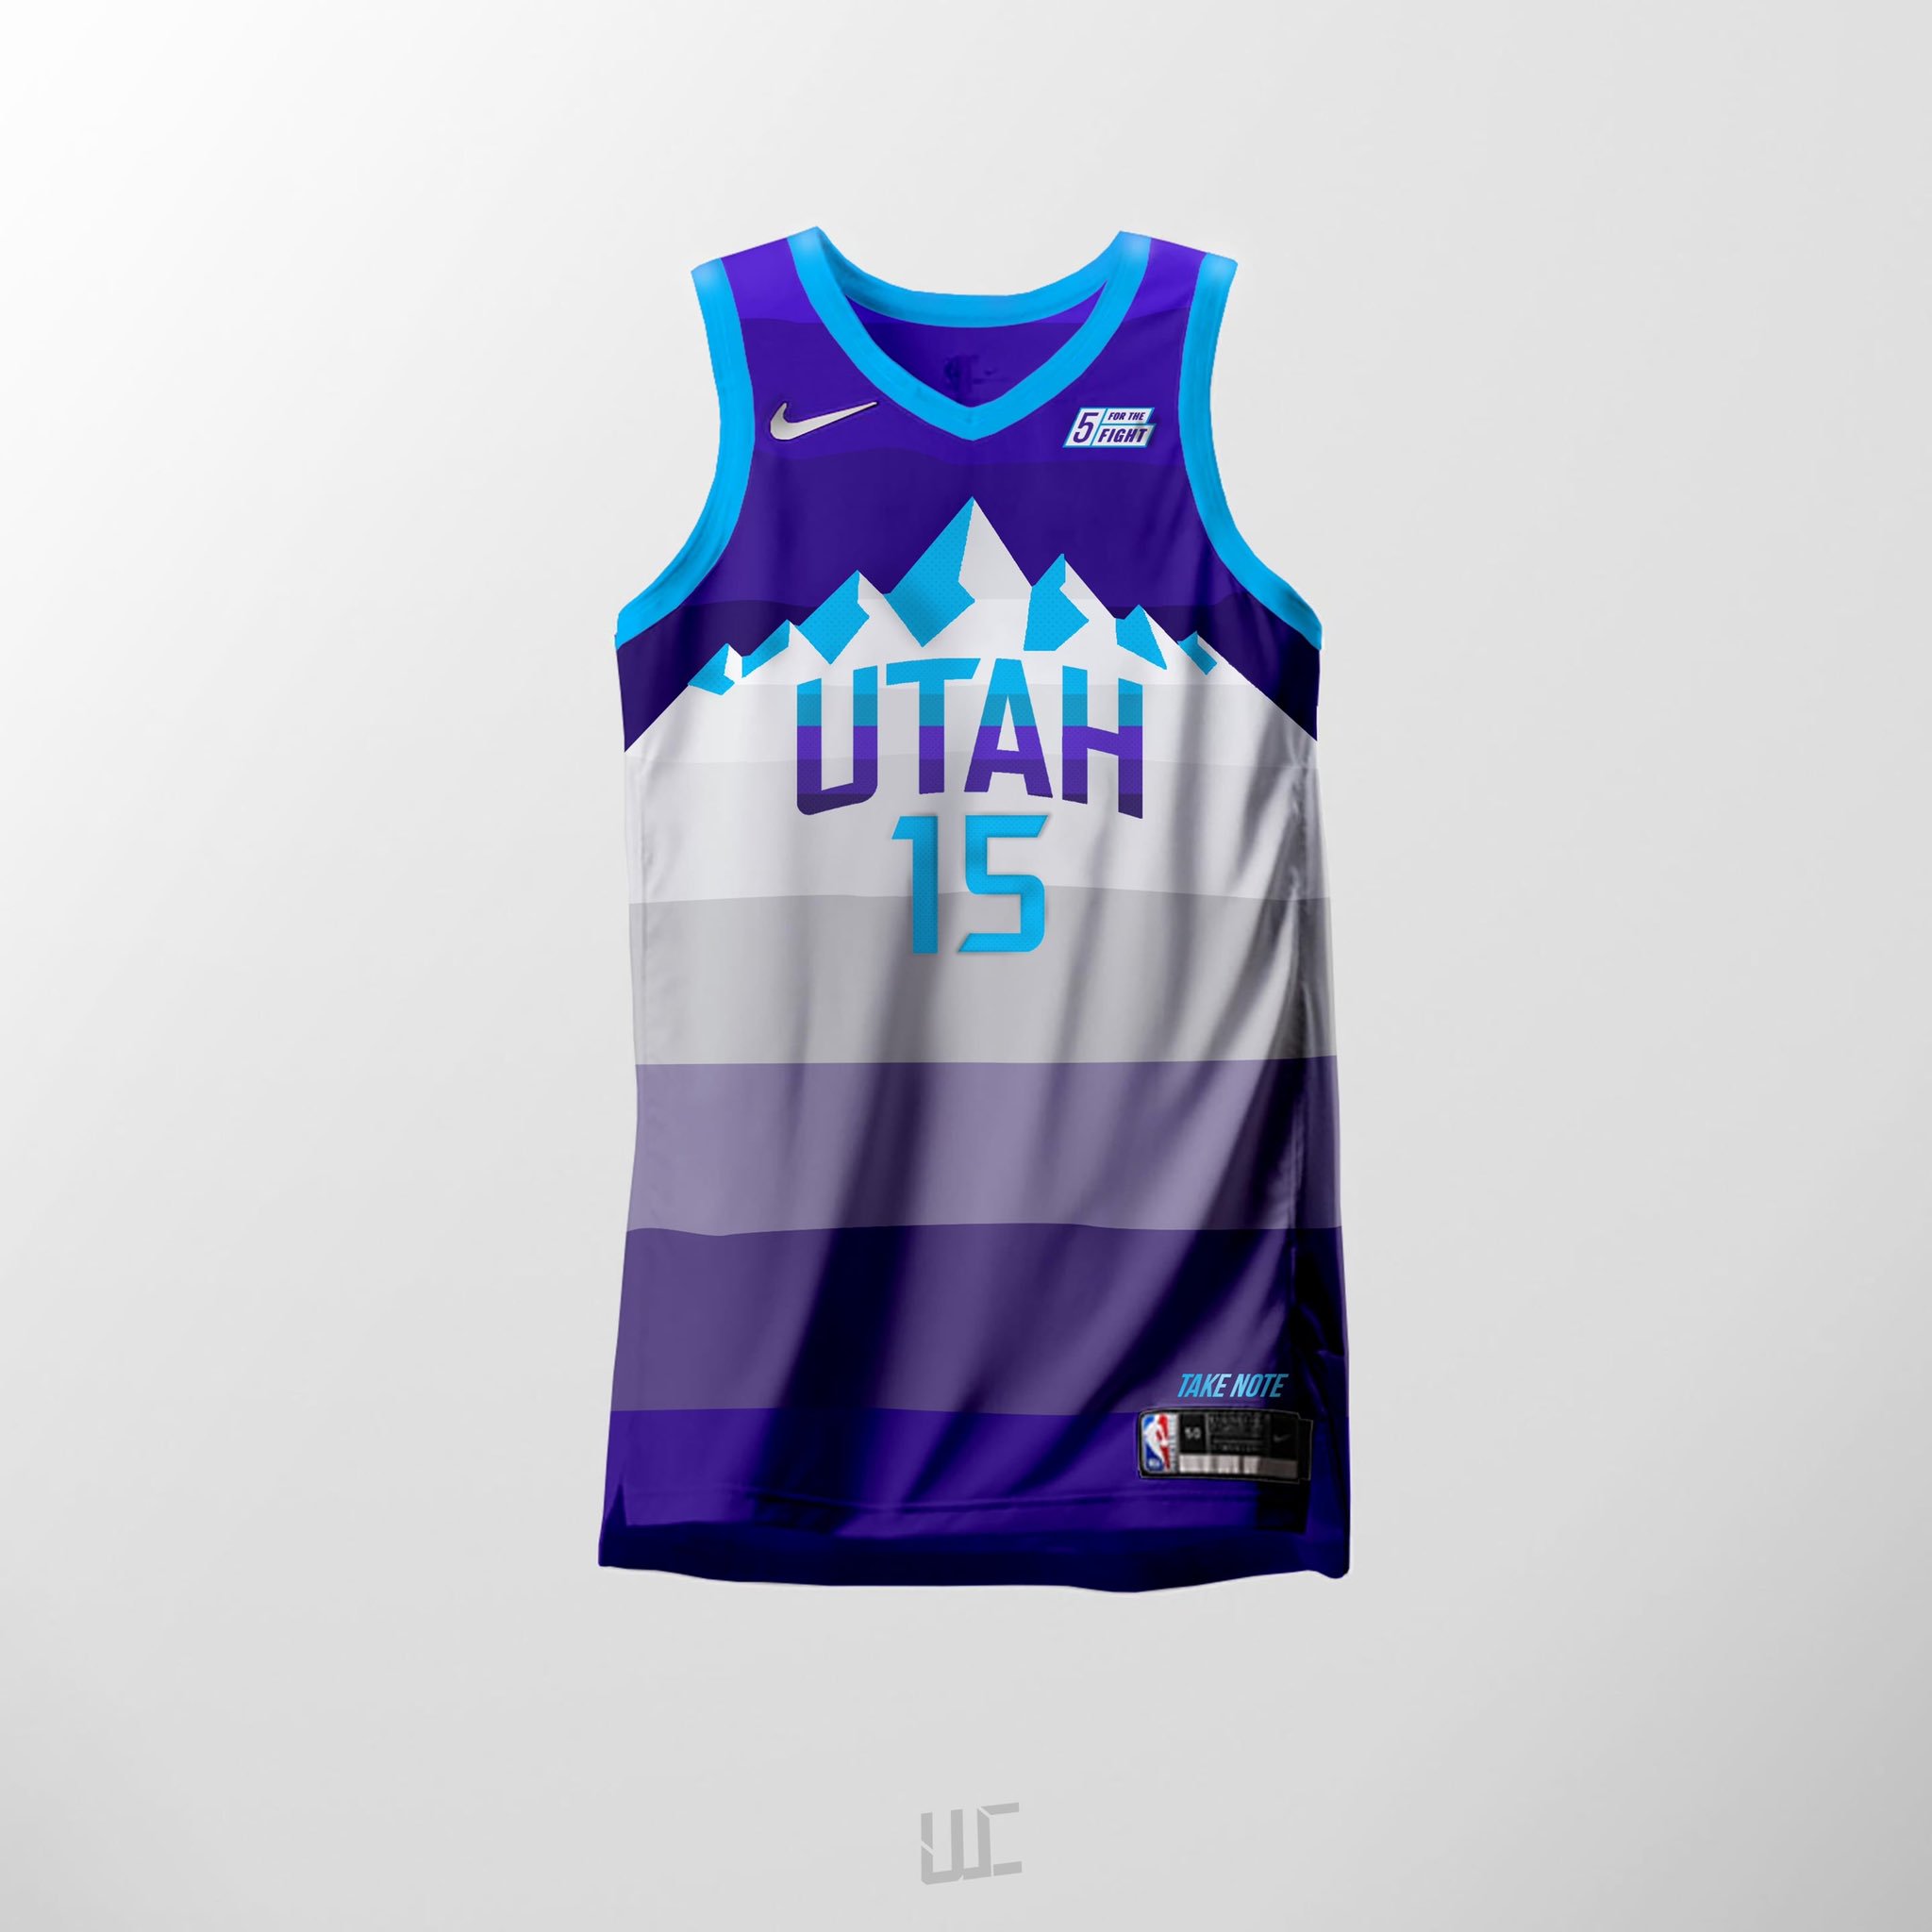 Utah Jazz Jersey Concepts. (Via Djossuppah Art) on twitter. in